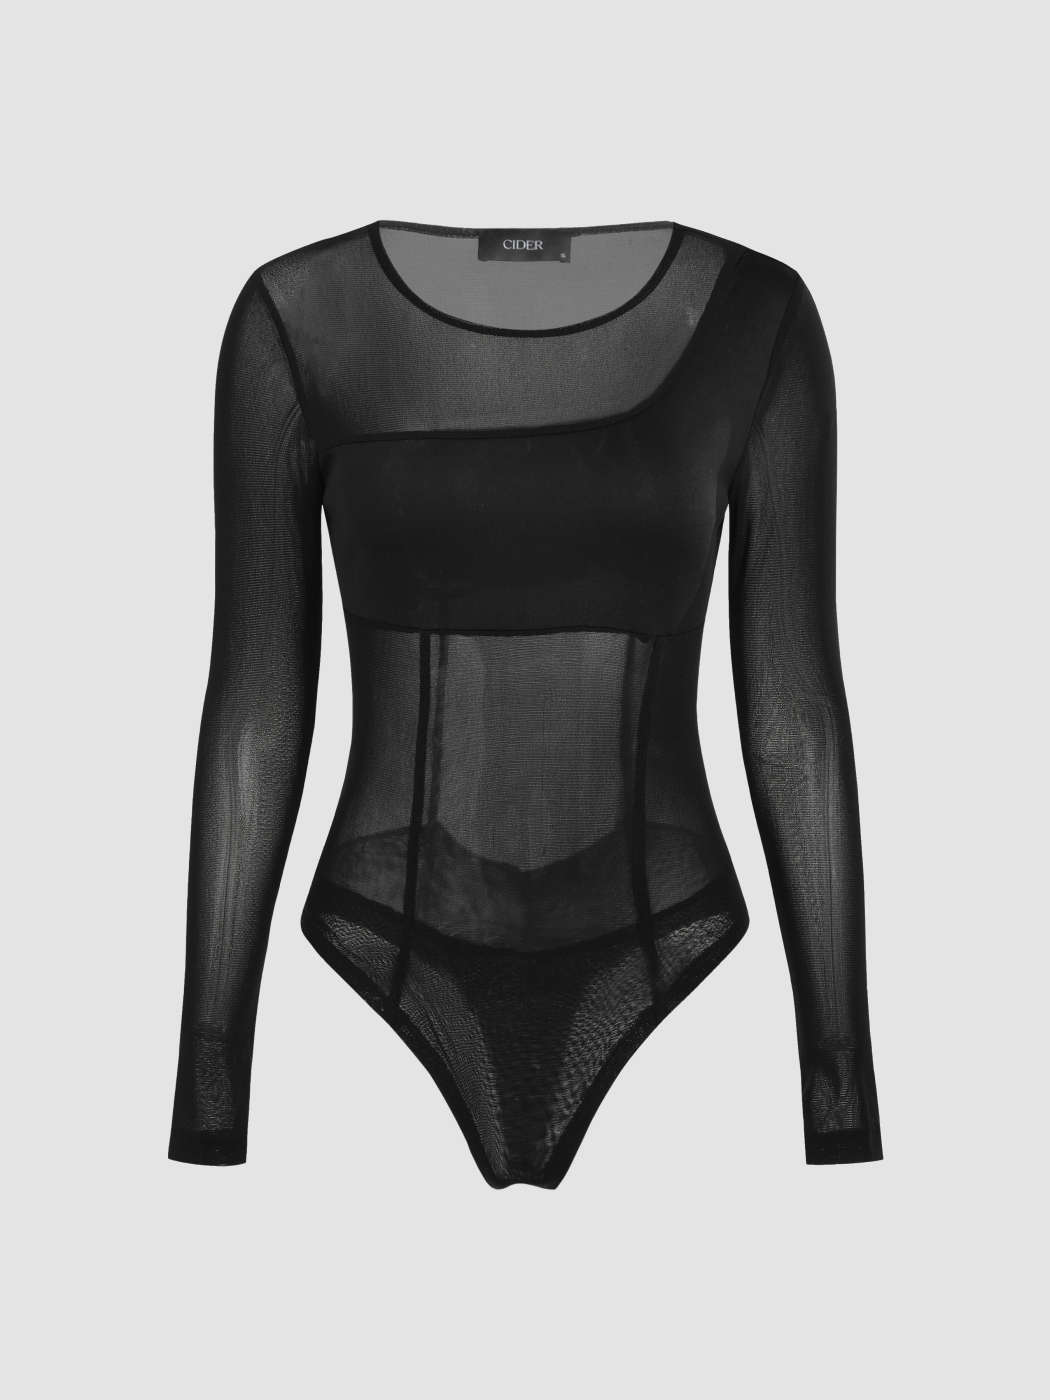 Sheer Bodysuits, Inc Black, Mesh & Long Sleeve